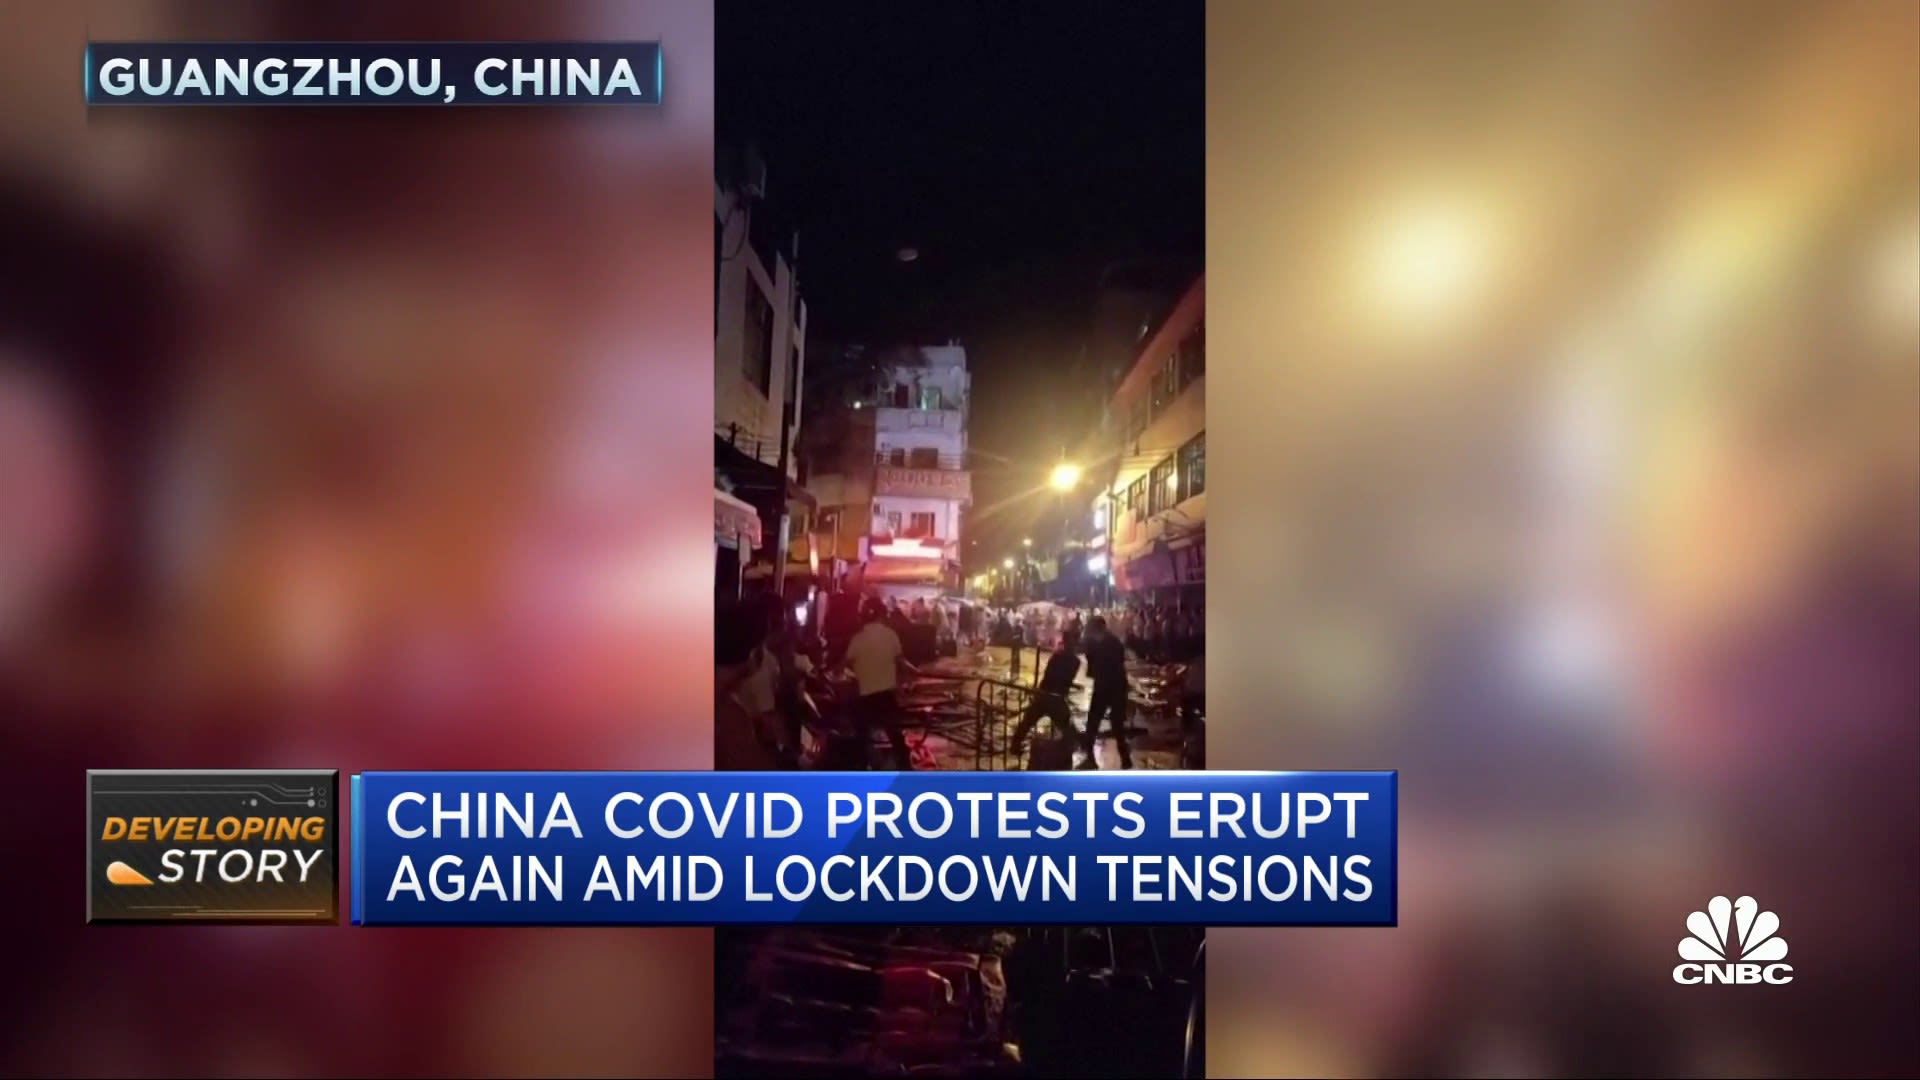 China Covid protests erupt again amid lockdown tensions